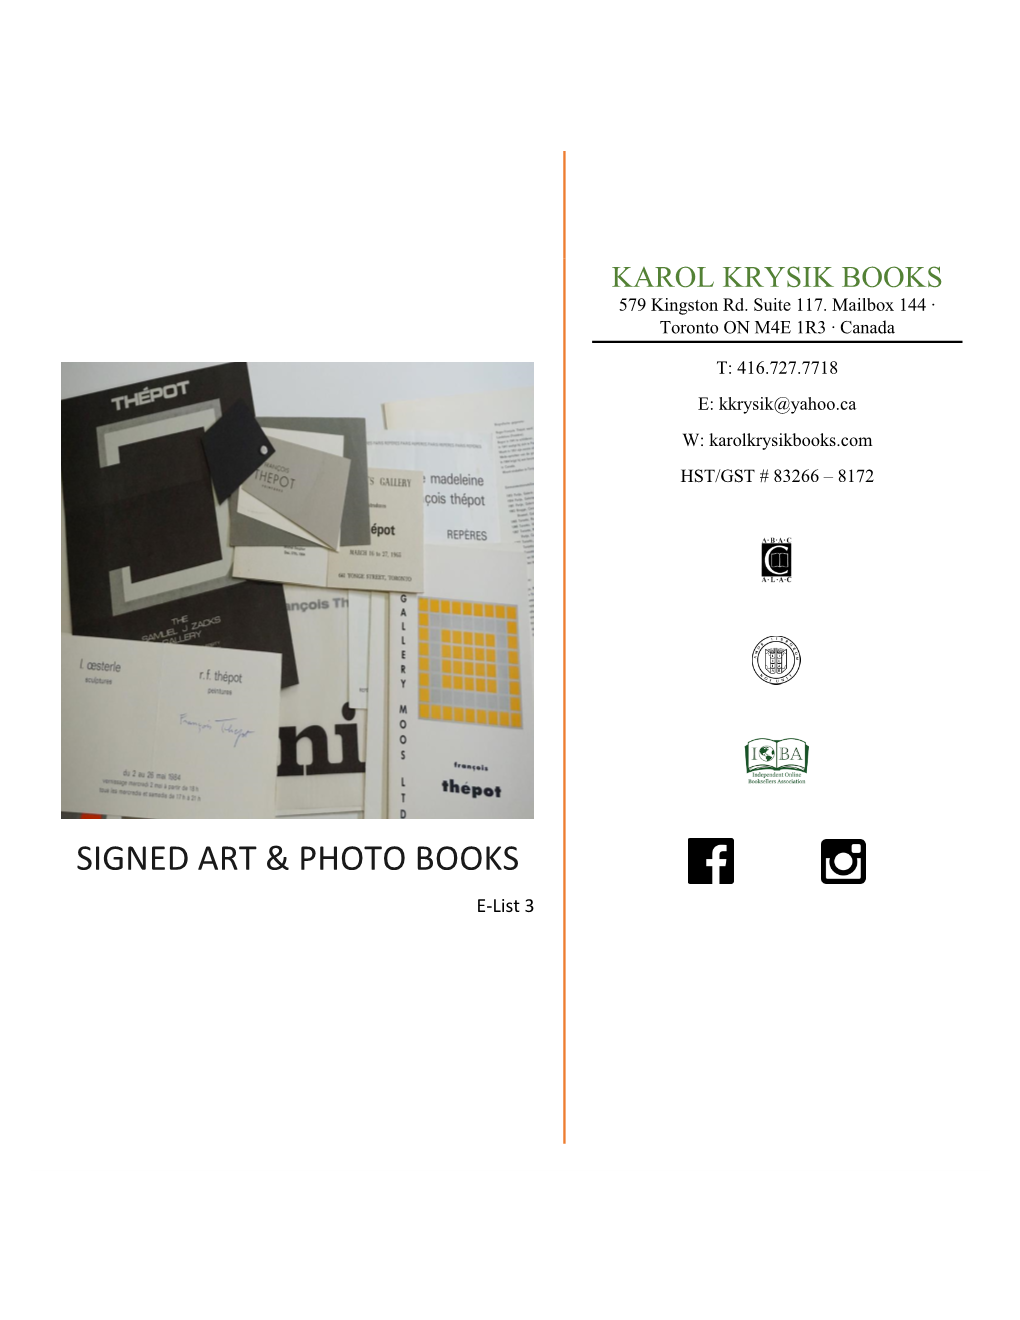 Signed Art & Photo Books